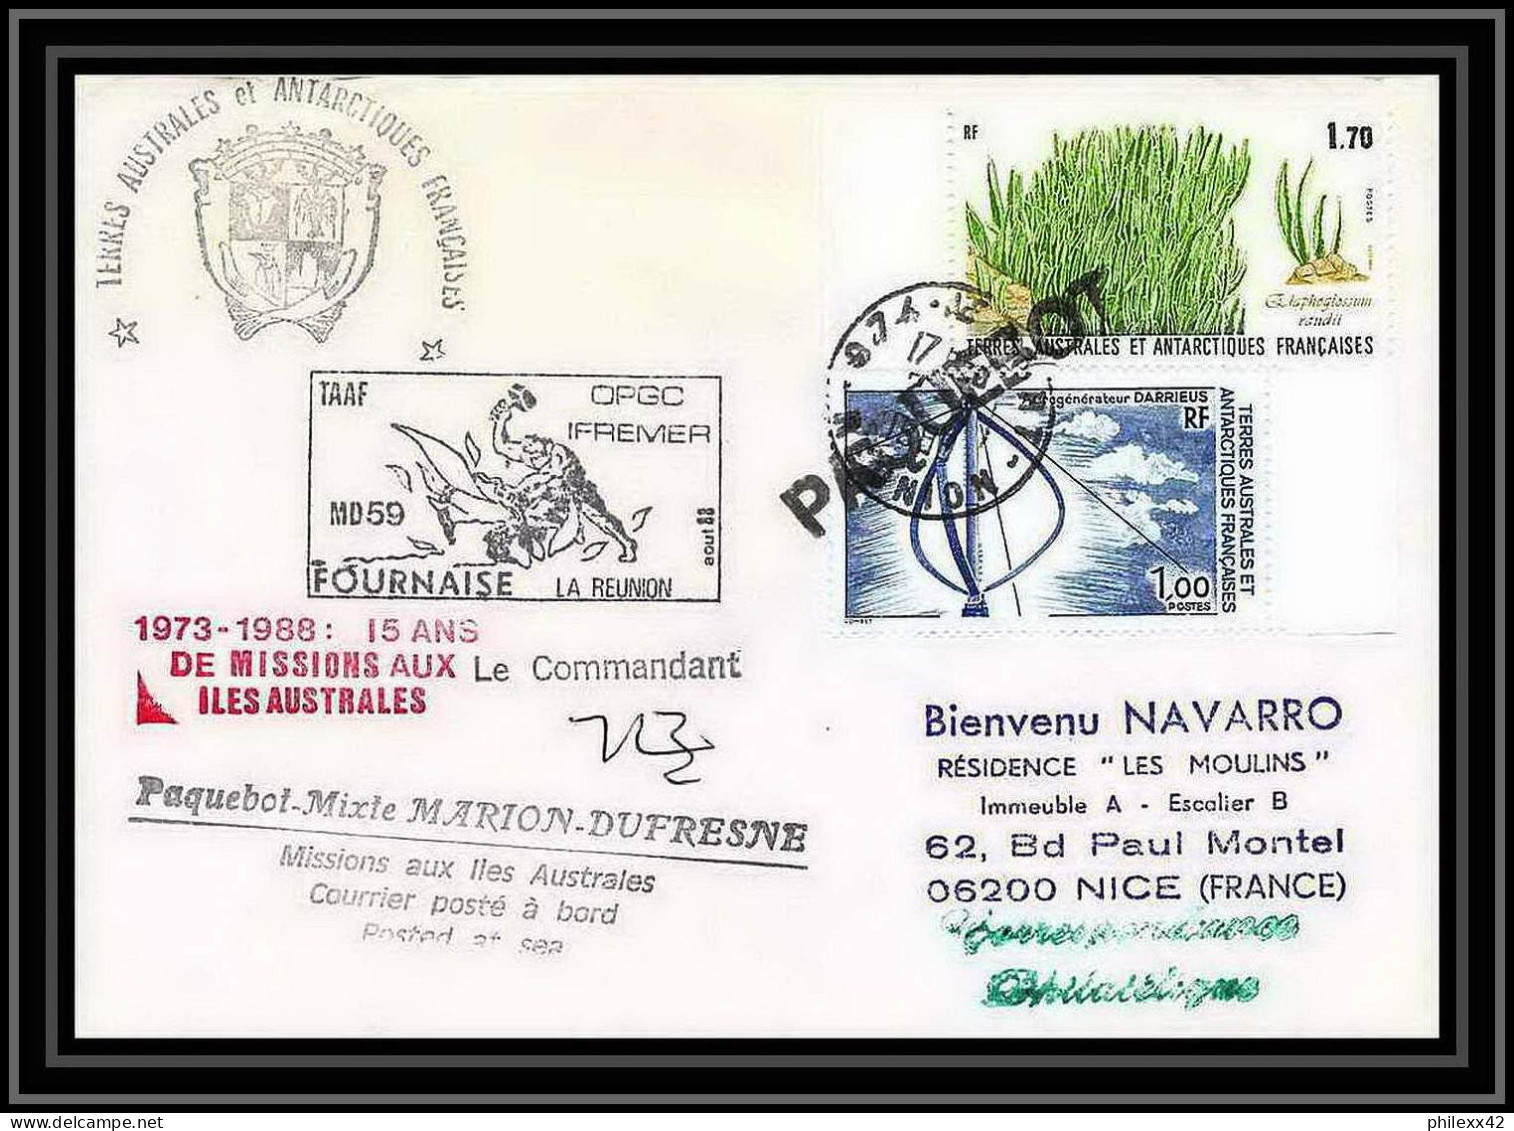 1584 TAAF Terres Australes Lettre (cover) Md 59 Fournaise La Reunion Signé Signed Marion Dufresne 2/9/1988 Obl Paquebot  - Spedizioni Antartiche